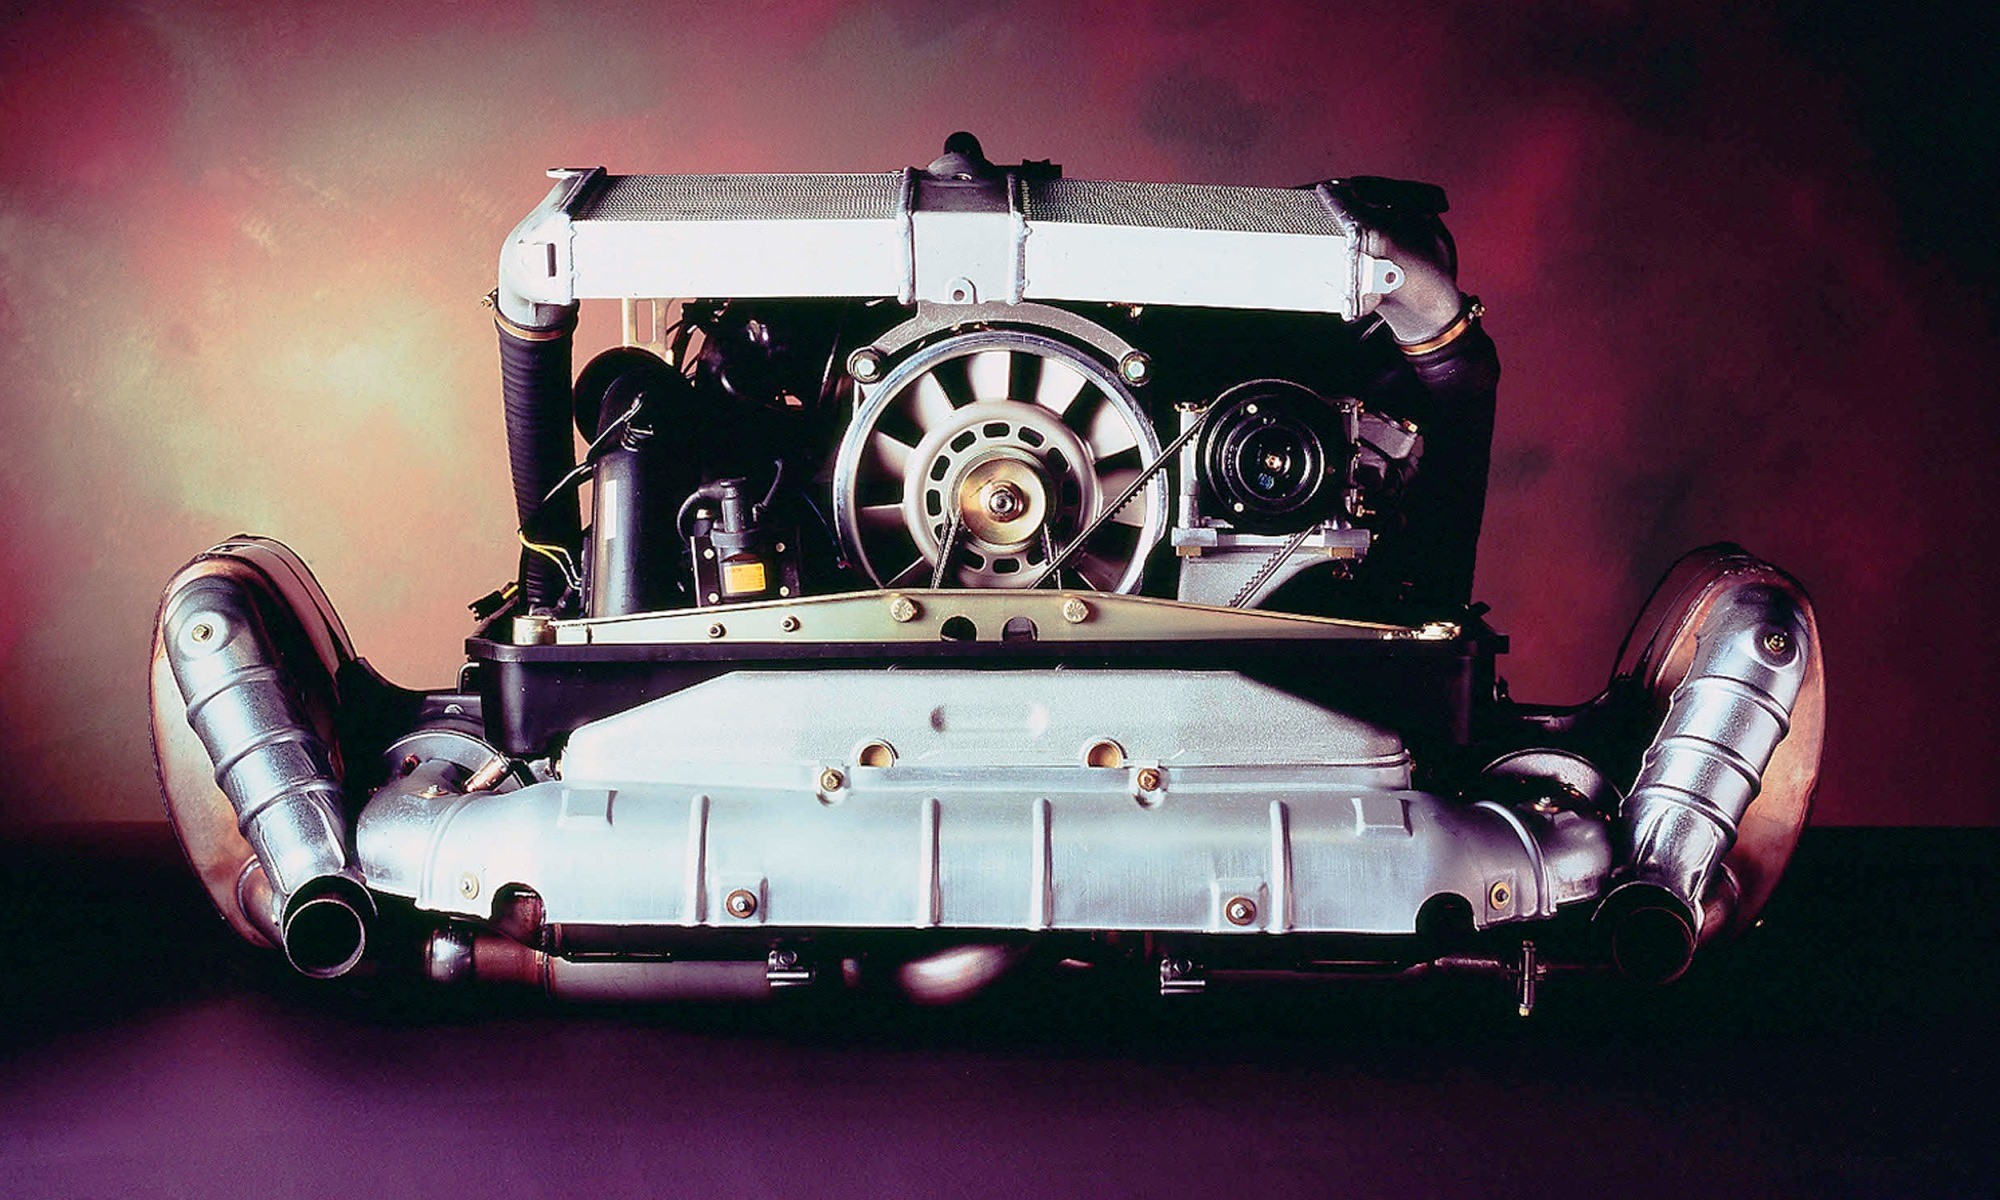 Turbocharged flat-six motor